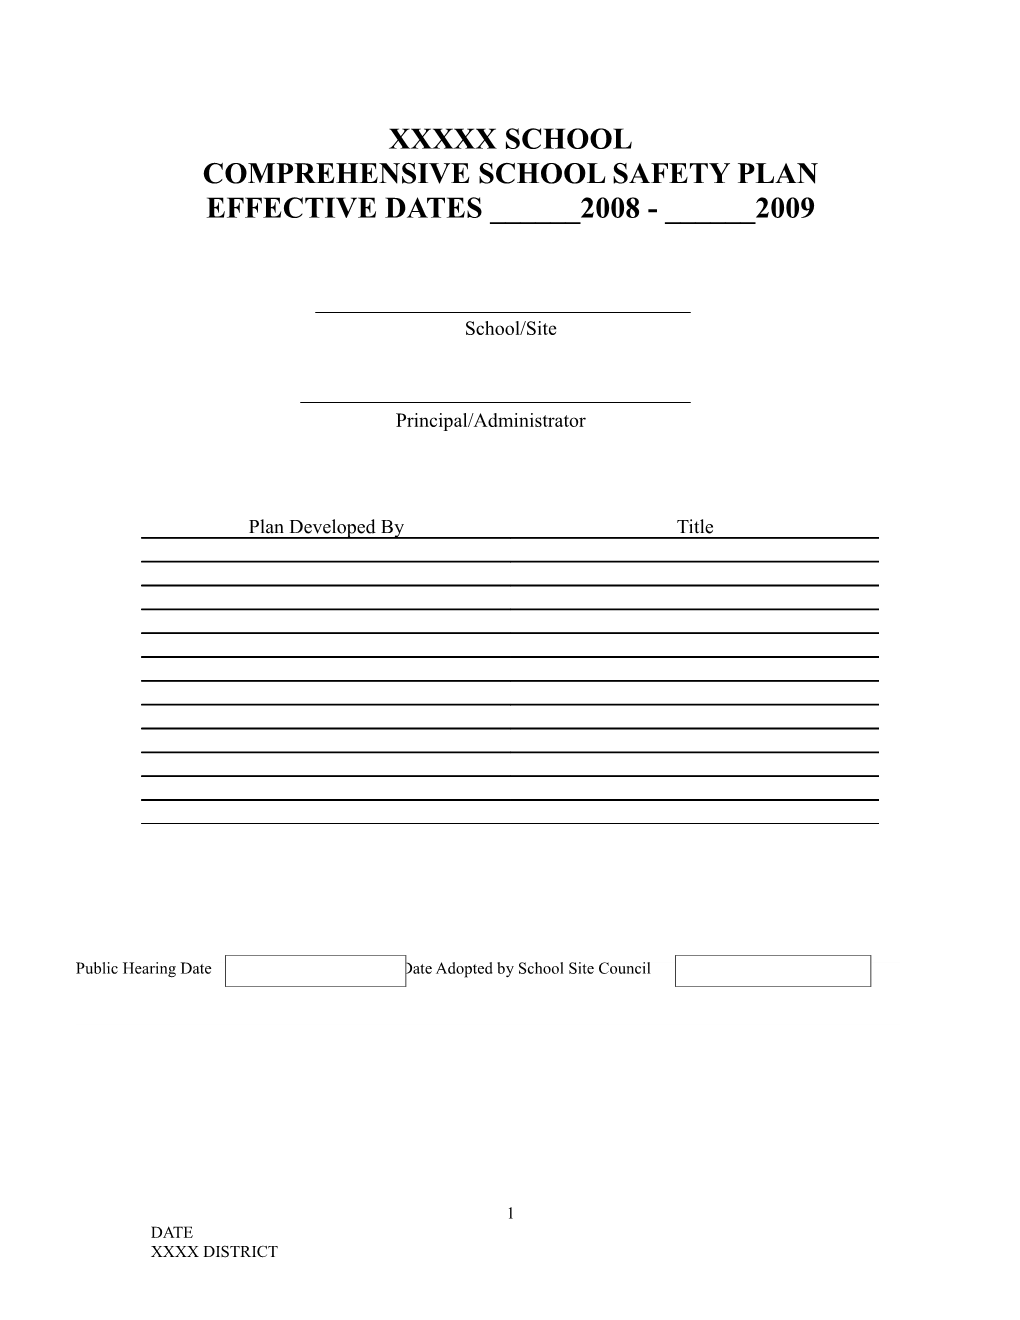 Comprehensiveschool Safety Plan